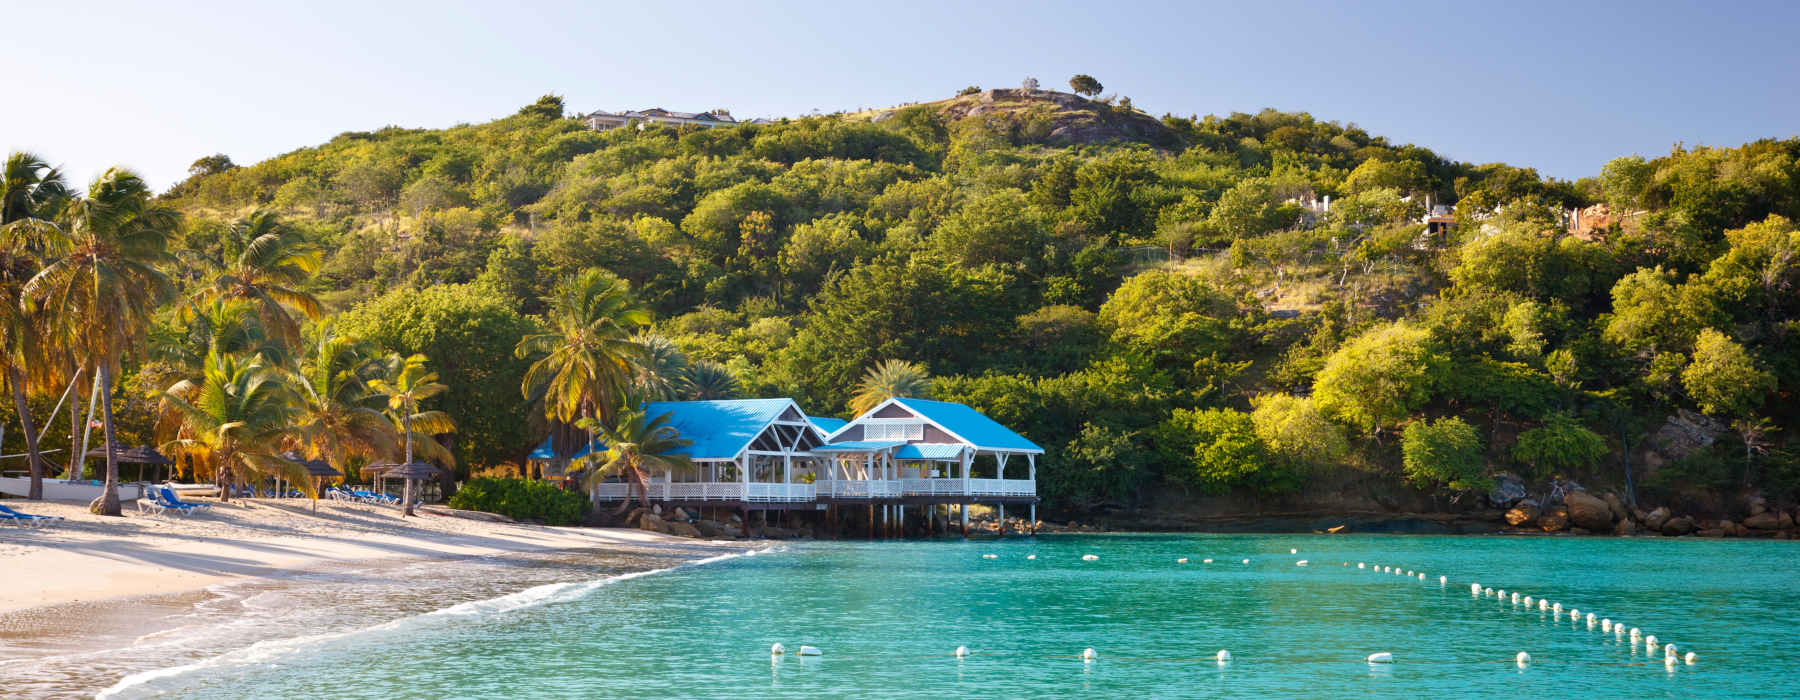 Antigua and Barbuda<br class="hidden-md hidden-lg" /> Honeymoons